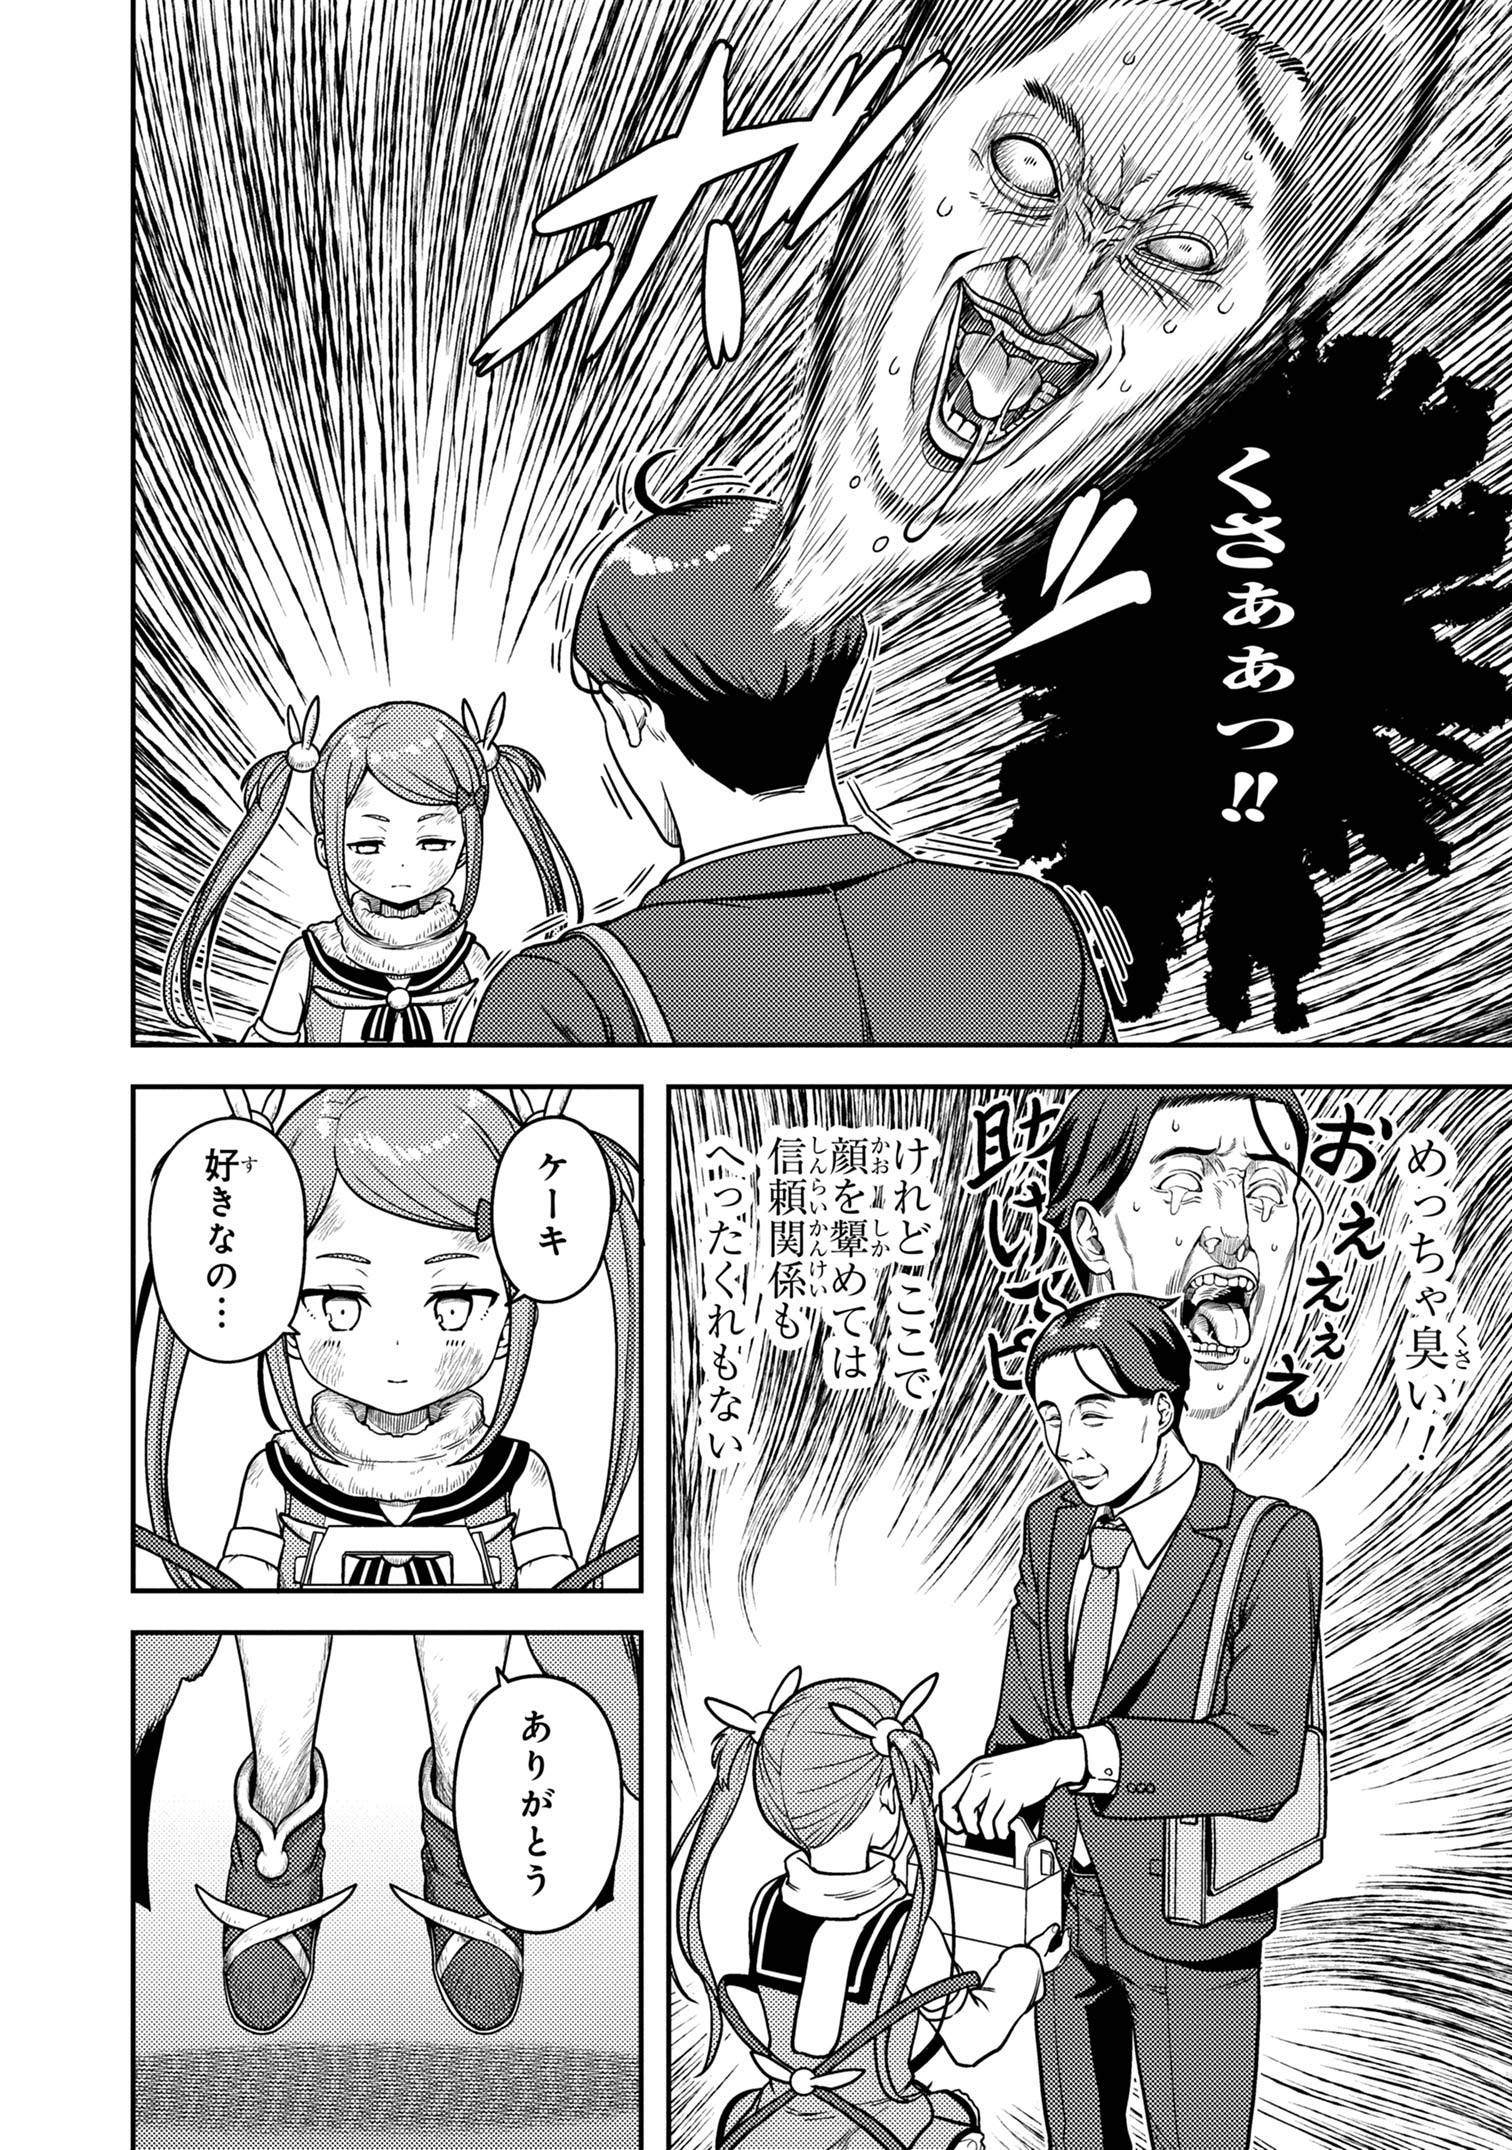 Sasaki to Pii-chan - Chapter 17.2 - Page 5